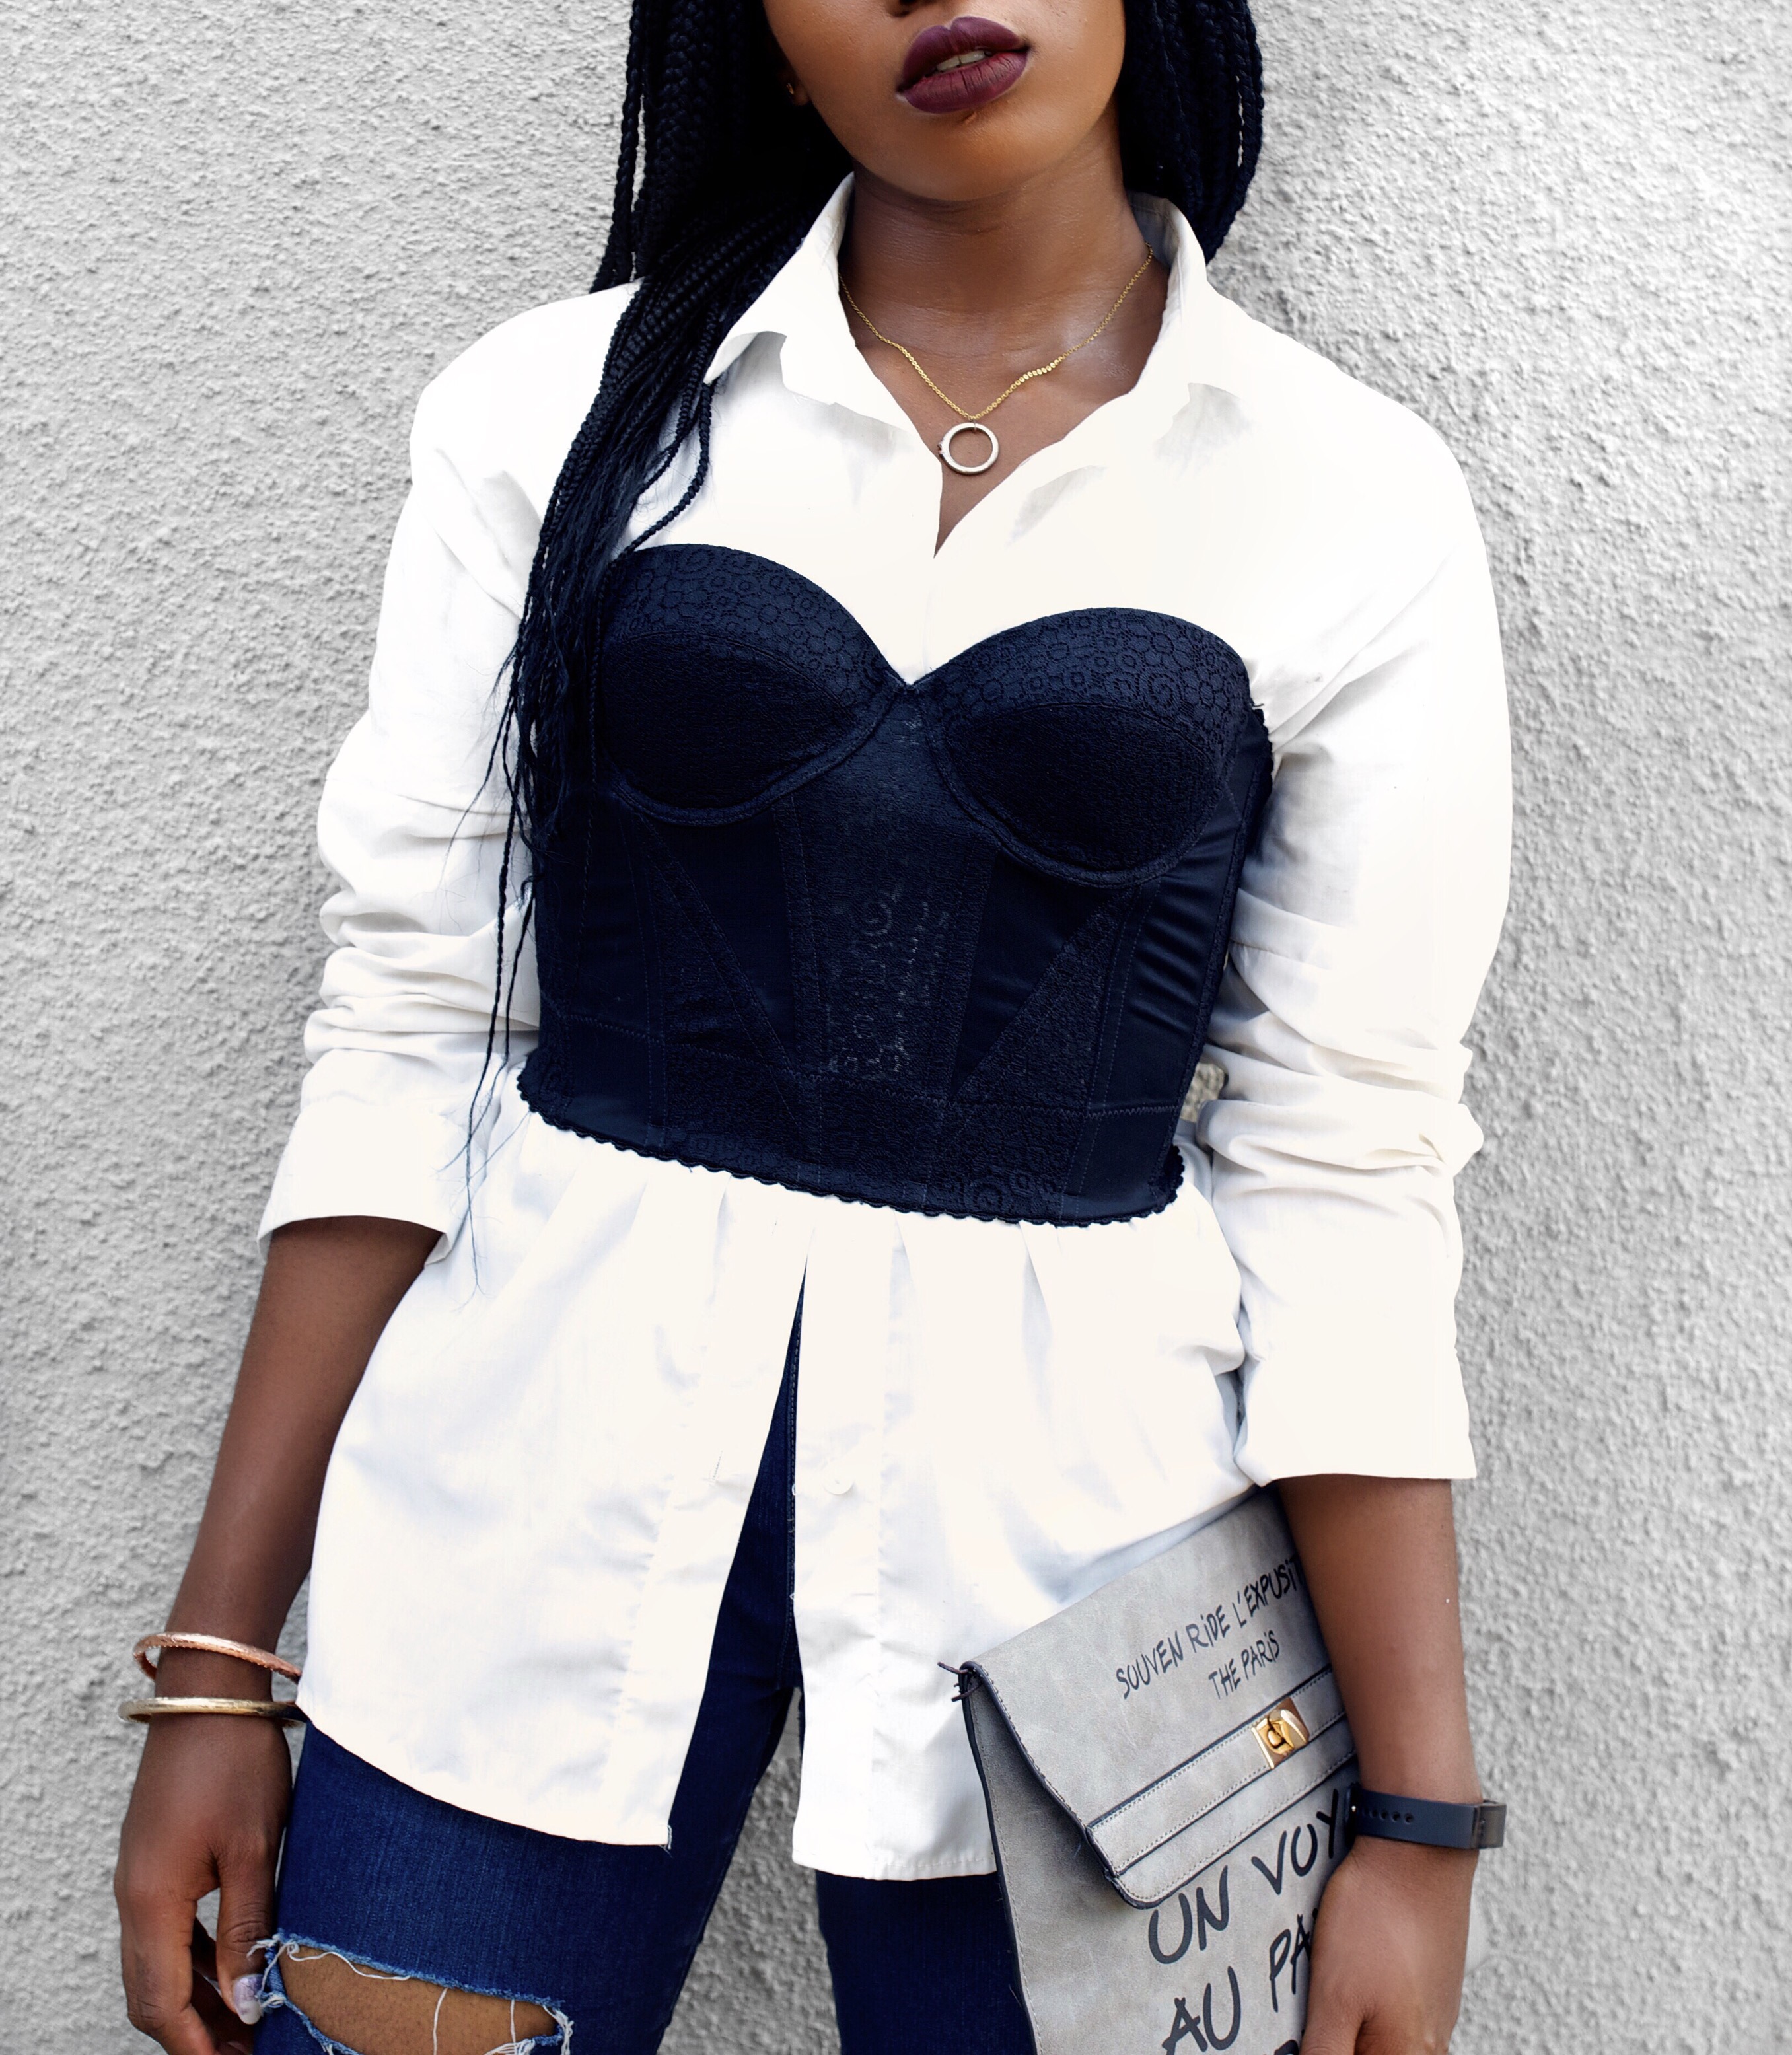 Fashionable Ways To Style Your Corset - Fashion - Nigeria